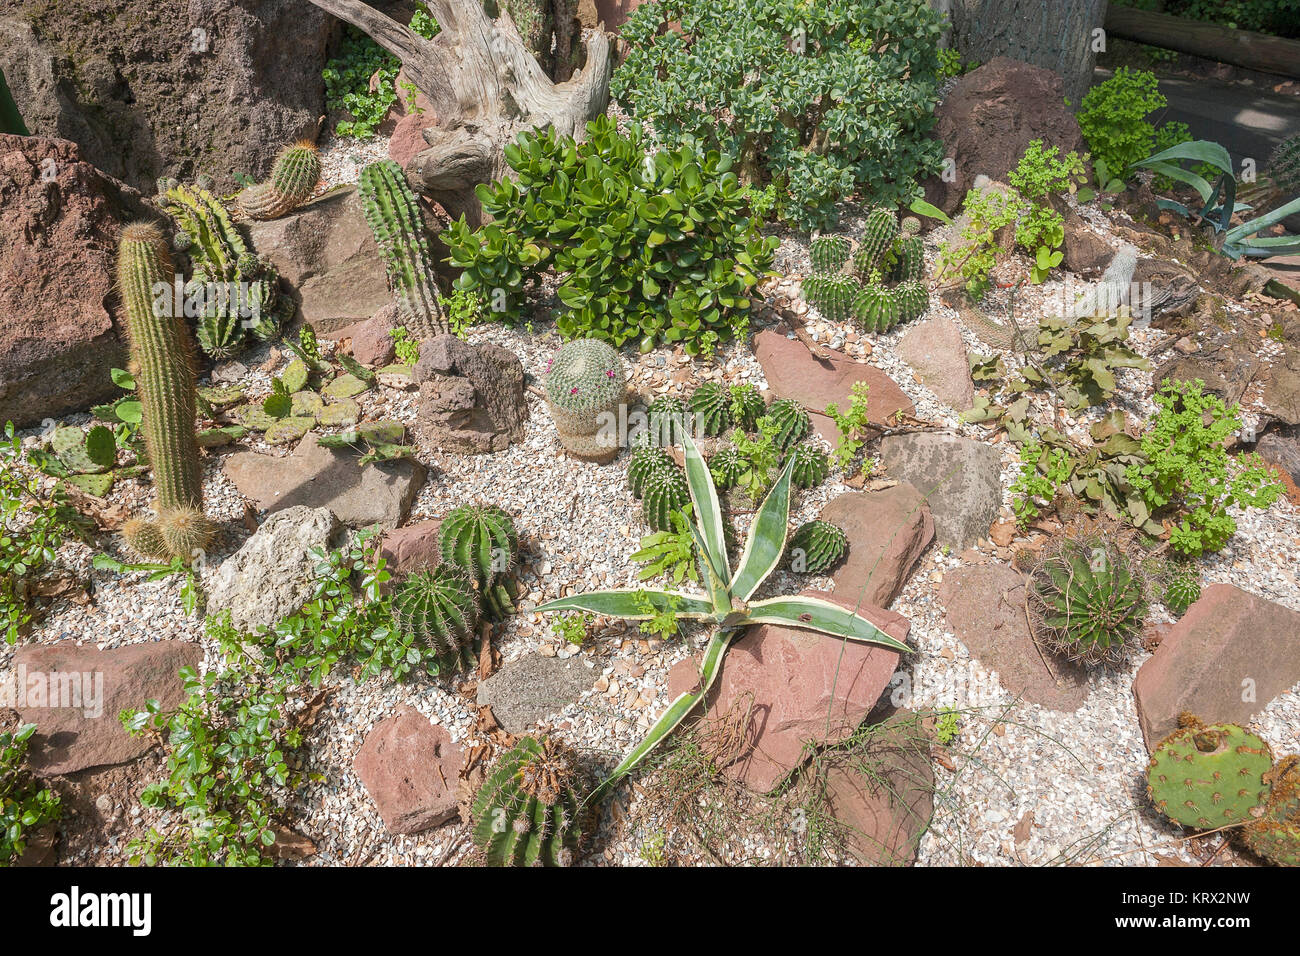 various cacti plants Stock Photo